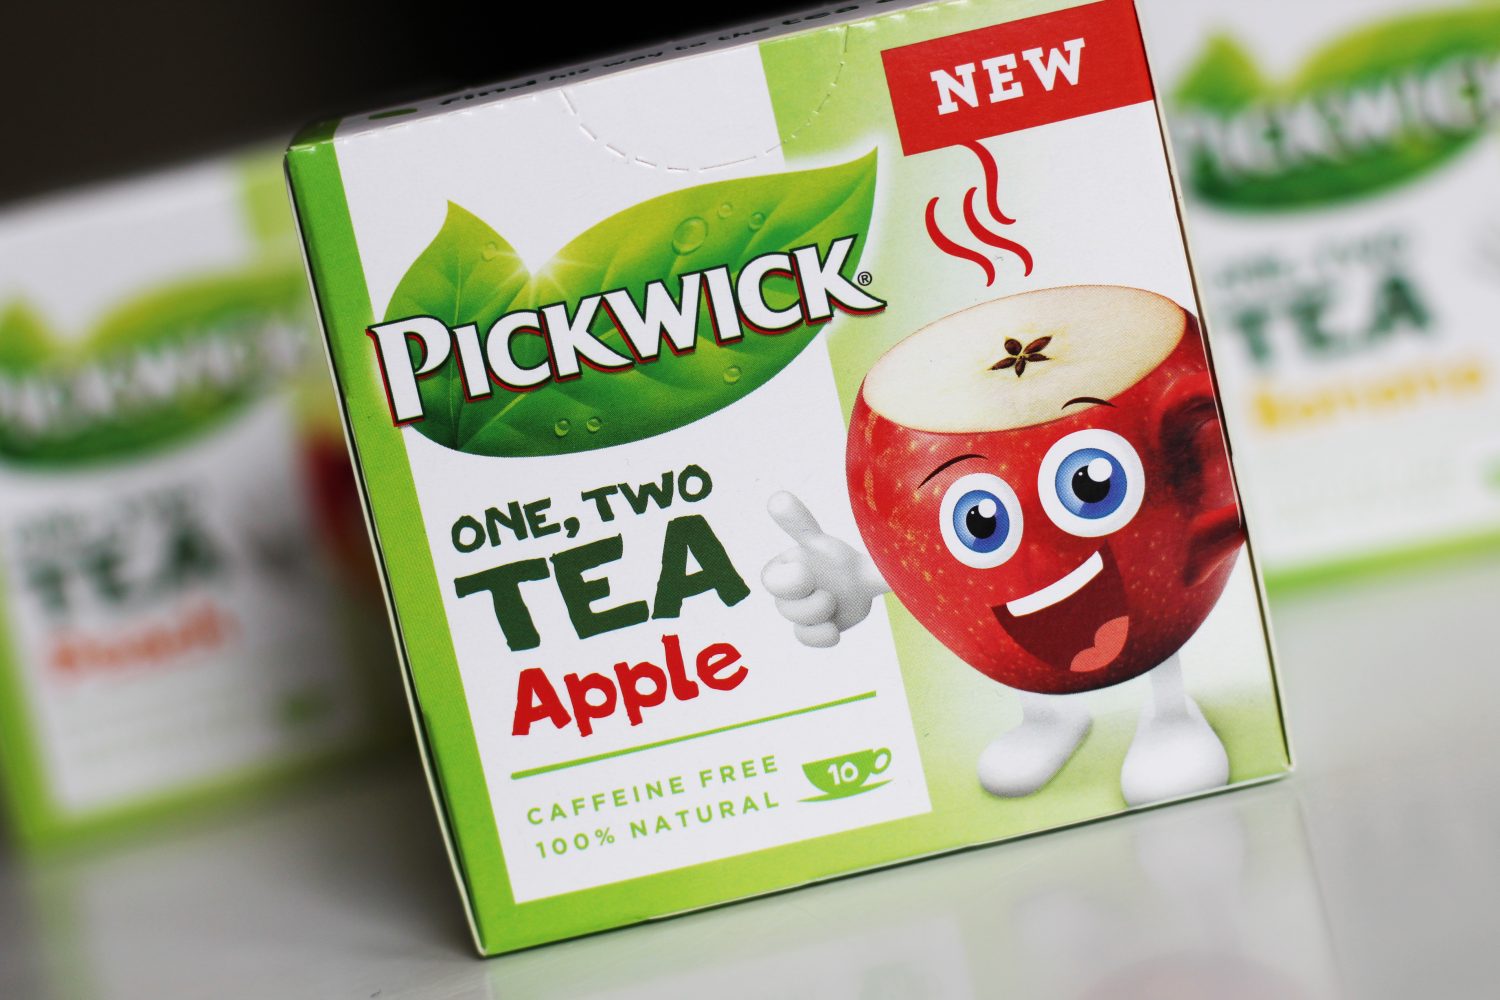 Pickwick One Two Tea Apple